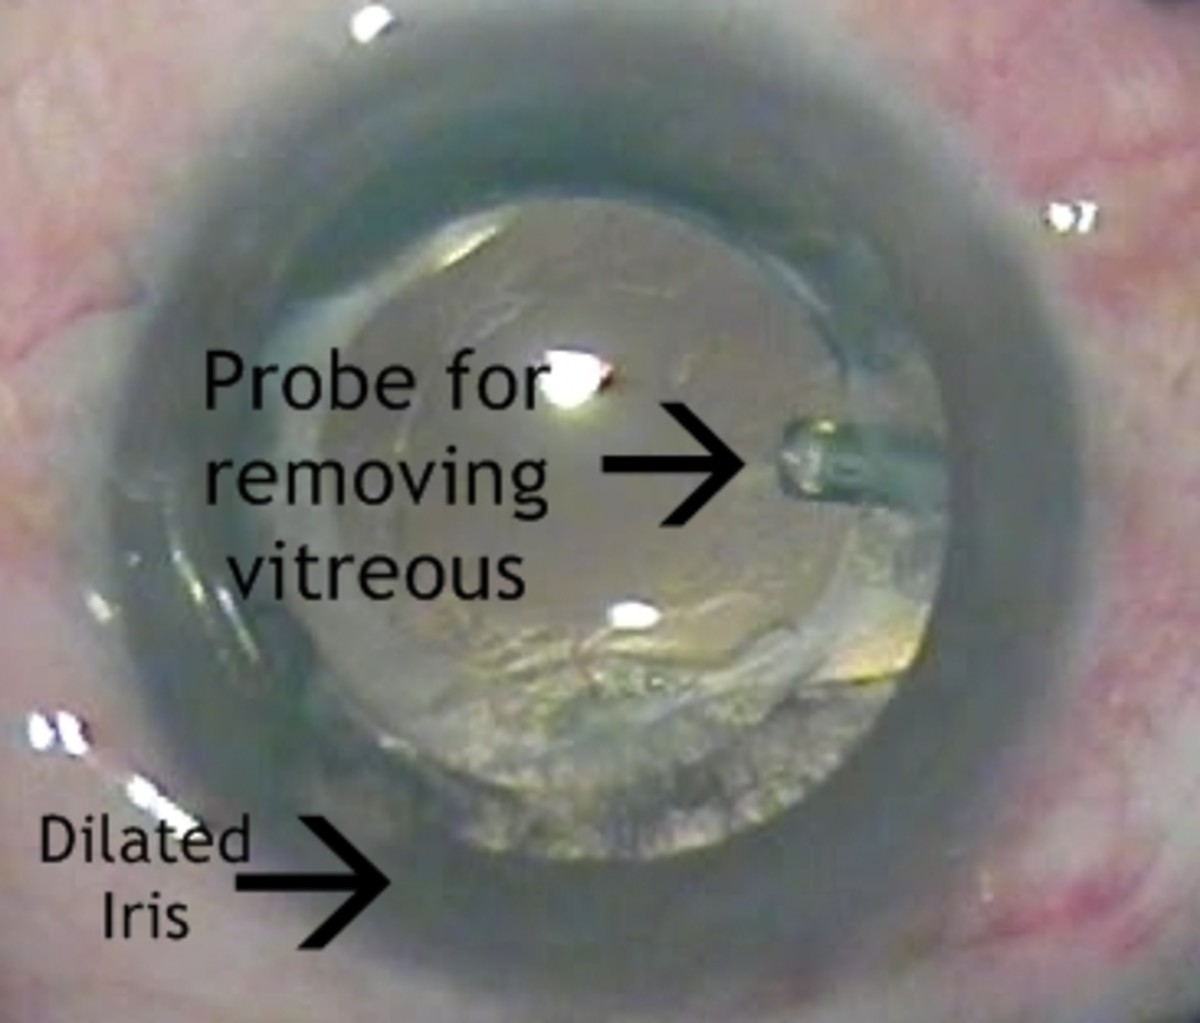 Treatment for vitreous hemorrhage